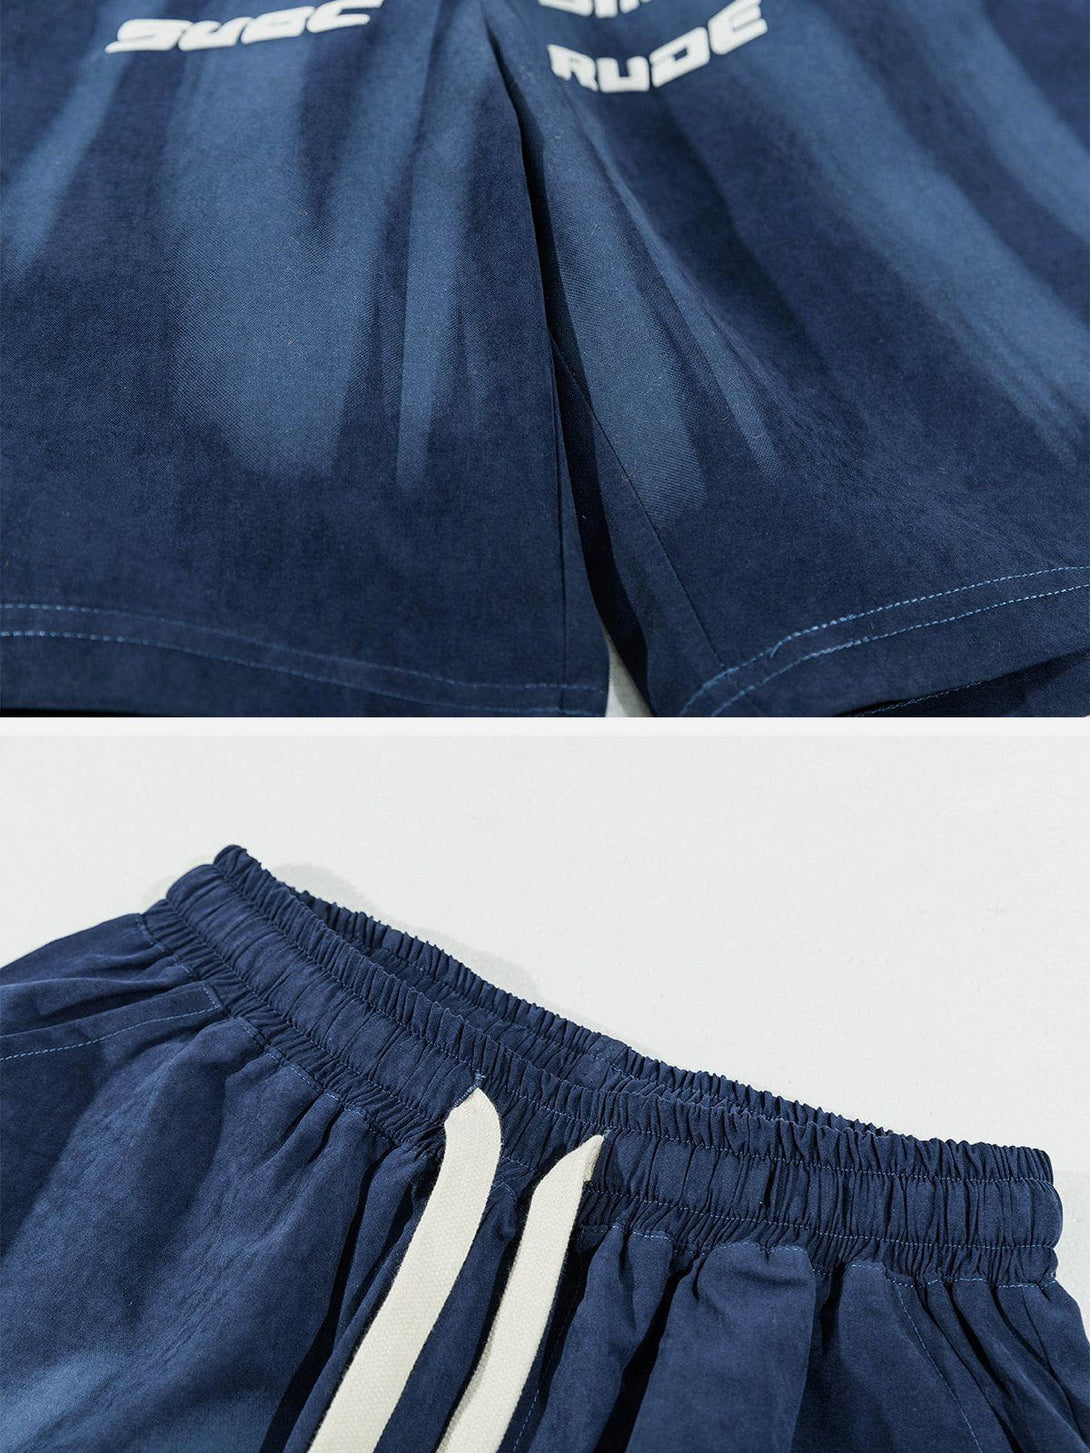 Majesda® - Tie-Dye Drawstring Shorts outfit ideas streetwear fashion